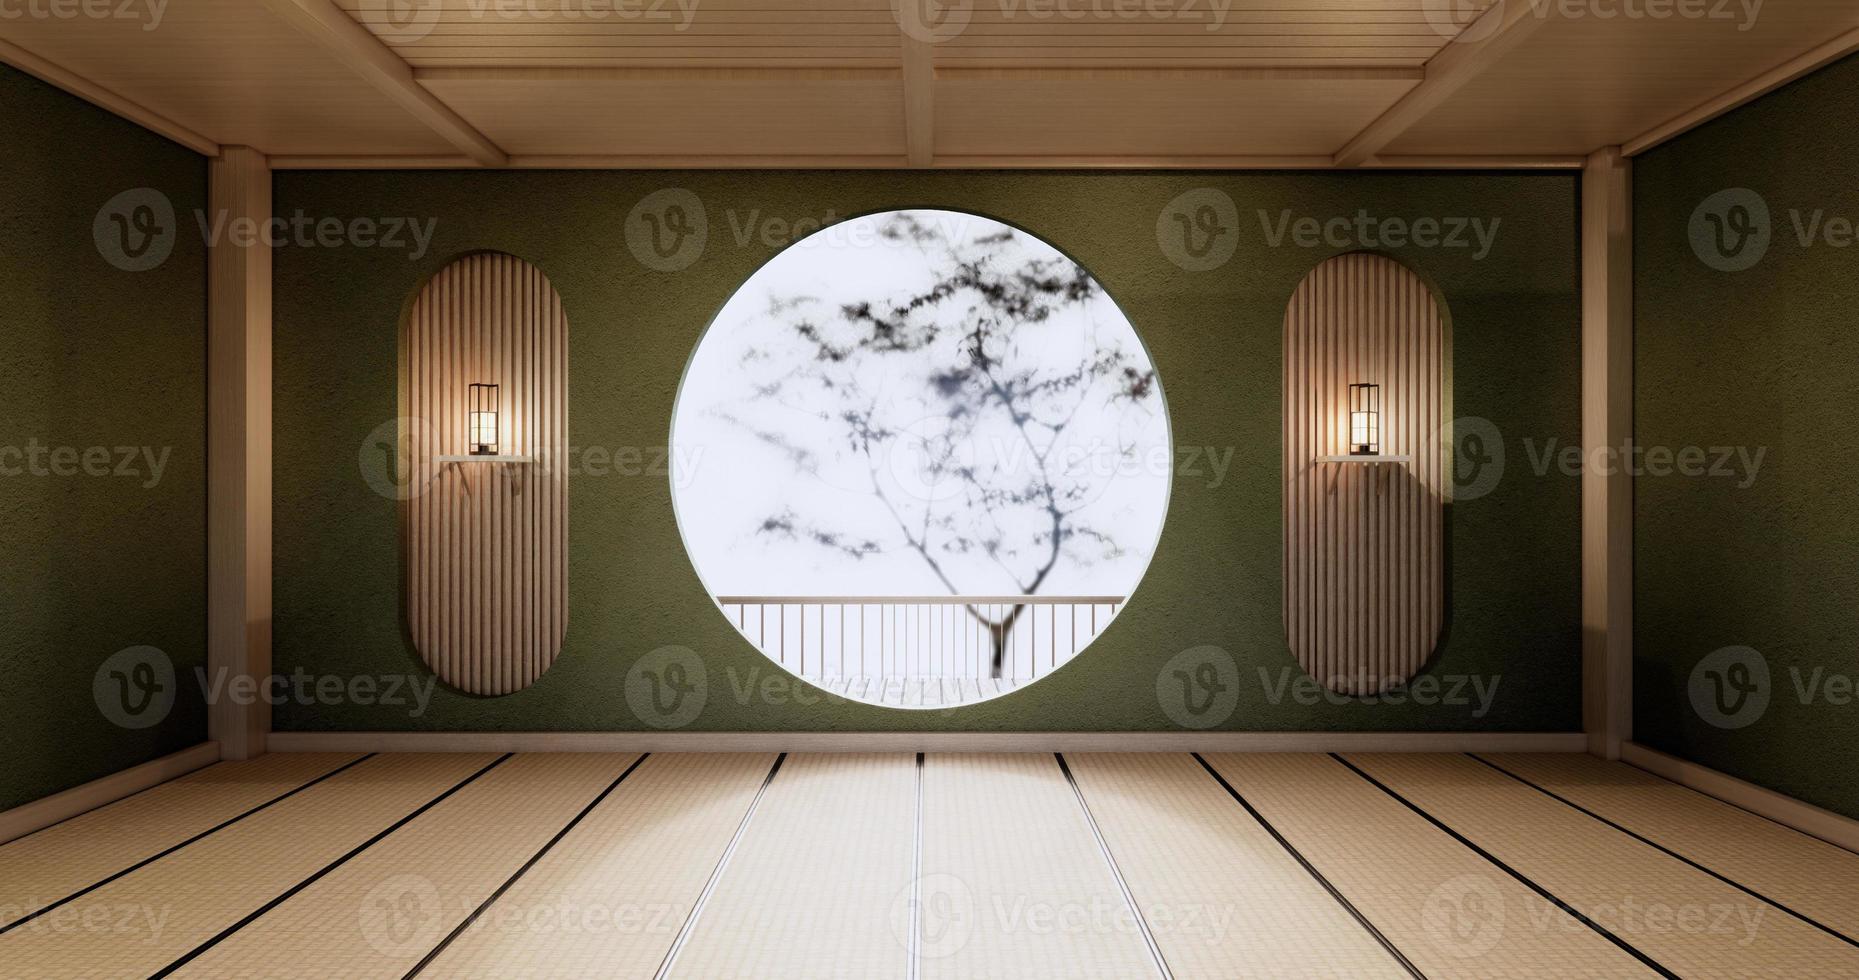 Kreisregalwanddesign, grüner leerer Raum japanisches Design, Tatami-Mattenboden. 3D-Rendering foto